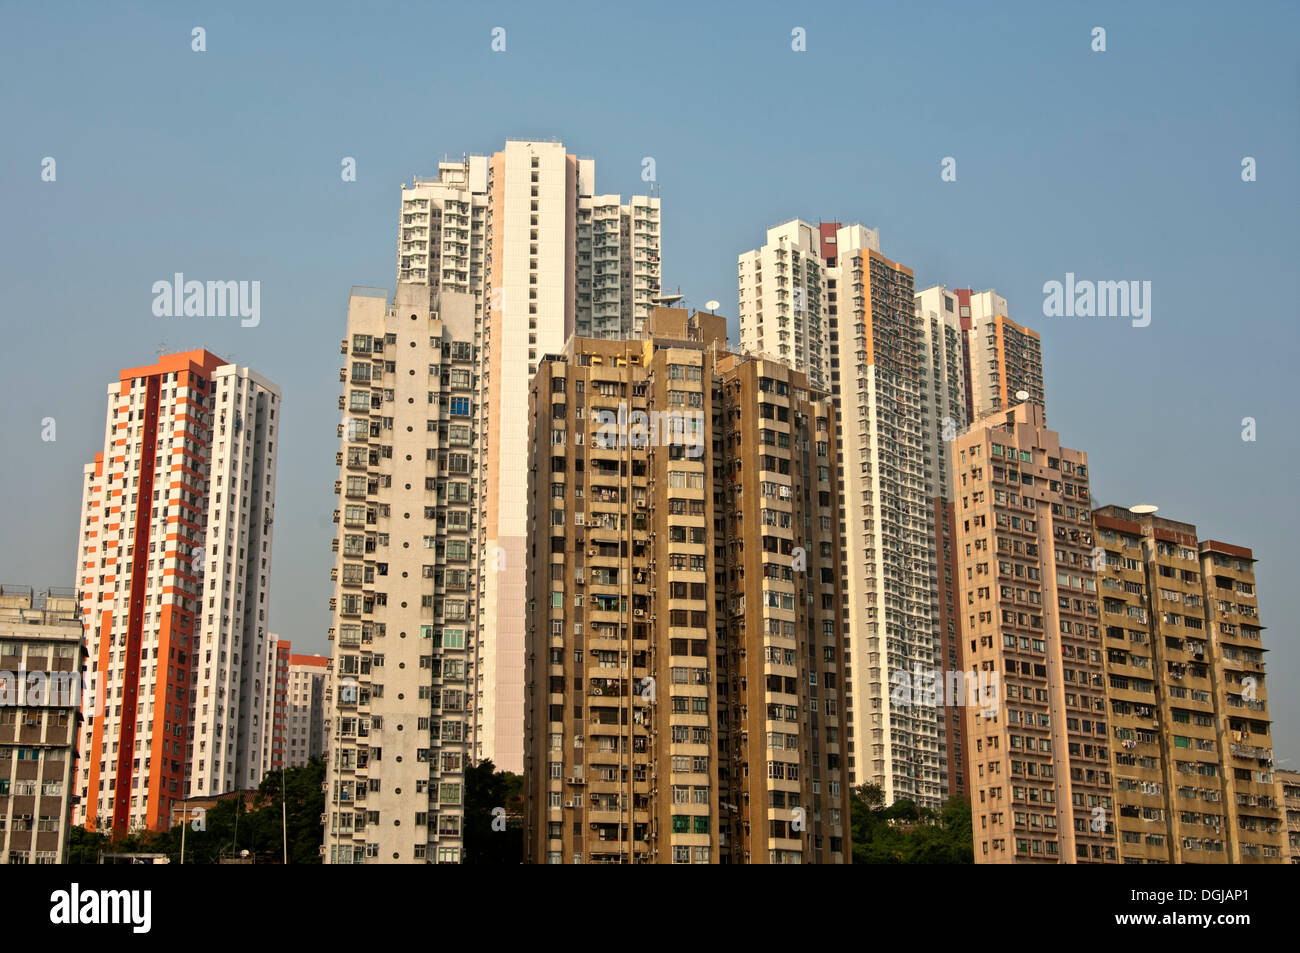 Hochhäuser aus verschiedenen Epochen in Aberdeen Harbour, Aberdeen, Hong Kong, China Stockfoto